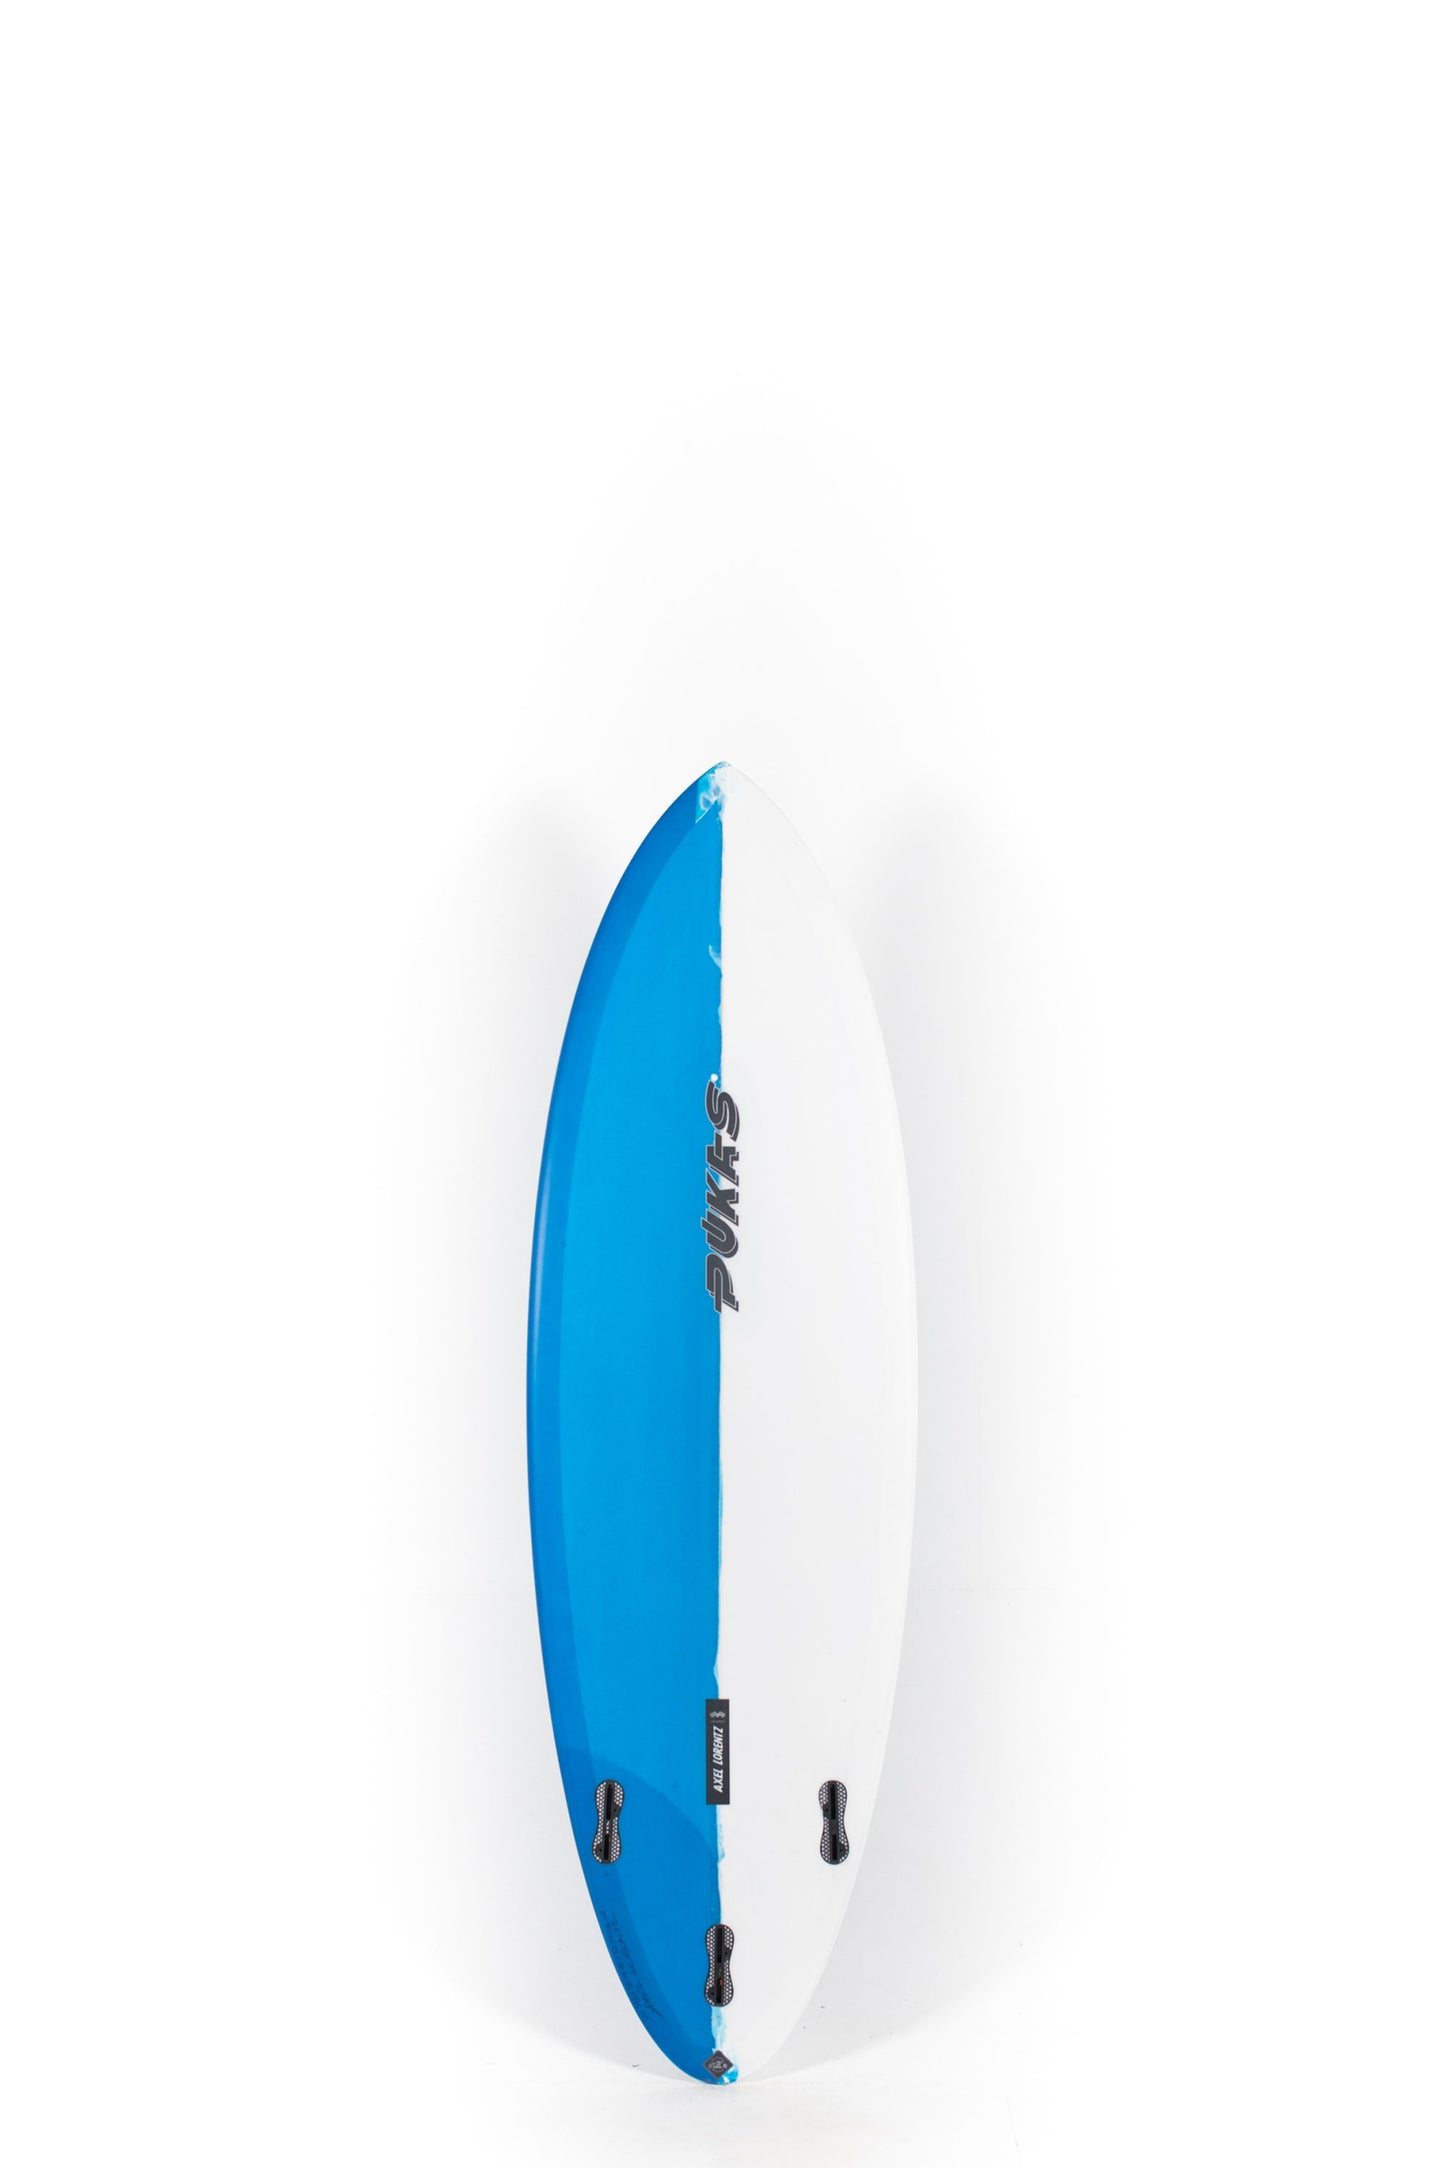 Pukas Surf Shop - Pukas Surfboard - ORIGINAL 69 by Axel Lorentz - 5’8” x 19,75 x 2,37 - 29,2L - AX07923